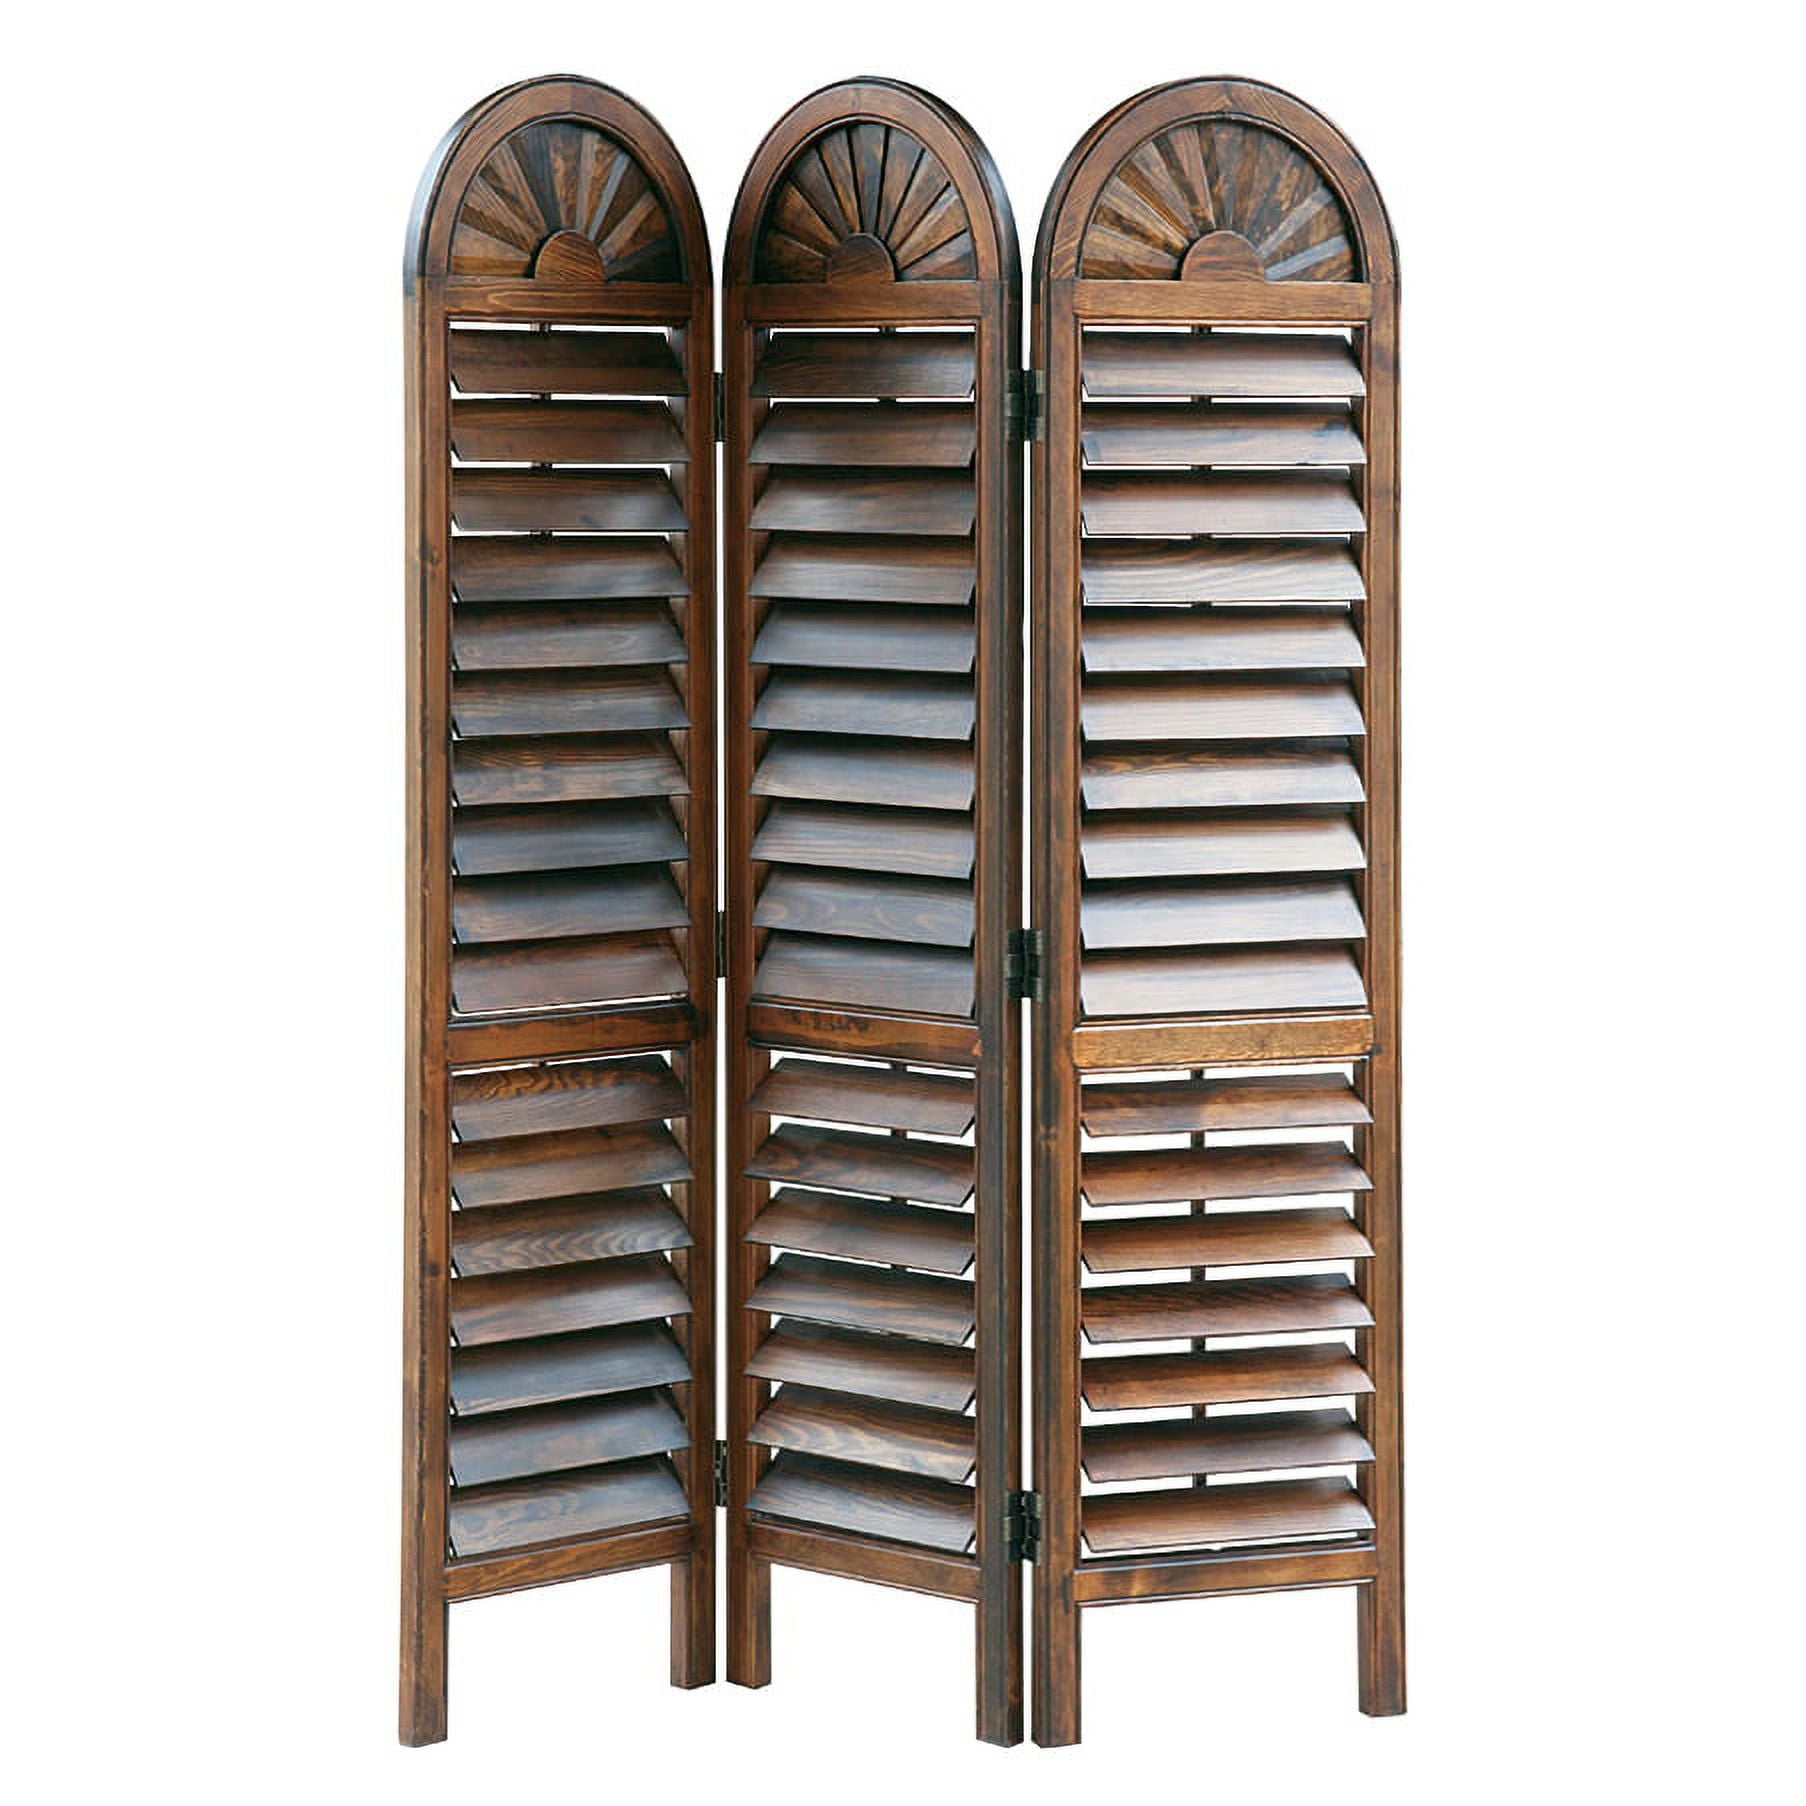 Picture of Benjara BM213459 Wooden 3 Panel Room Divider with Slatted Shutter Design - Brown